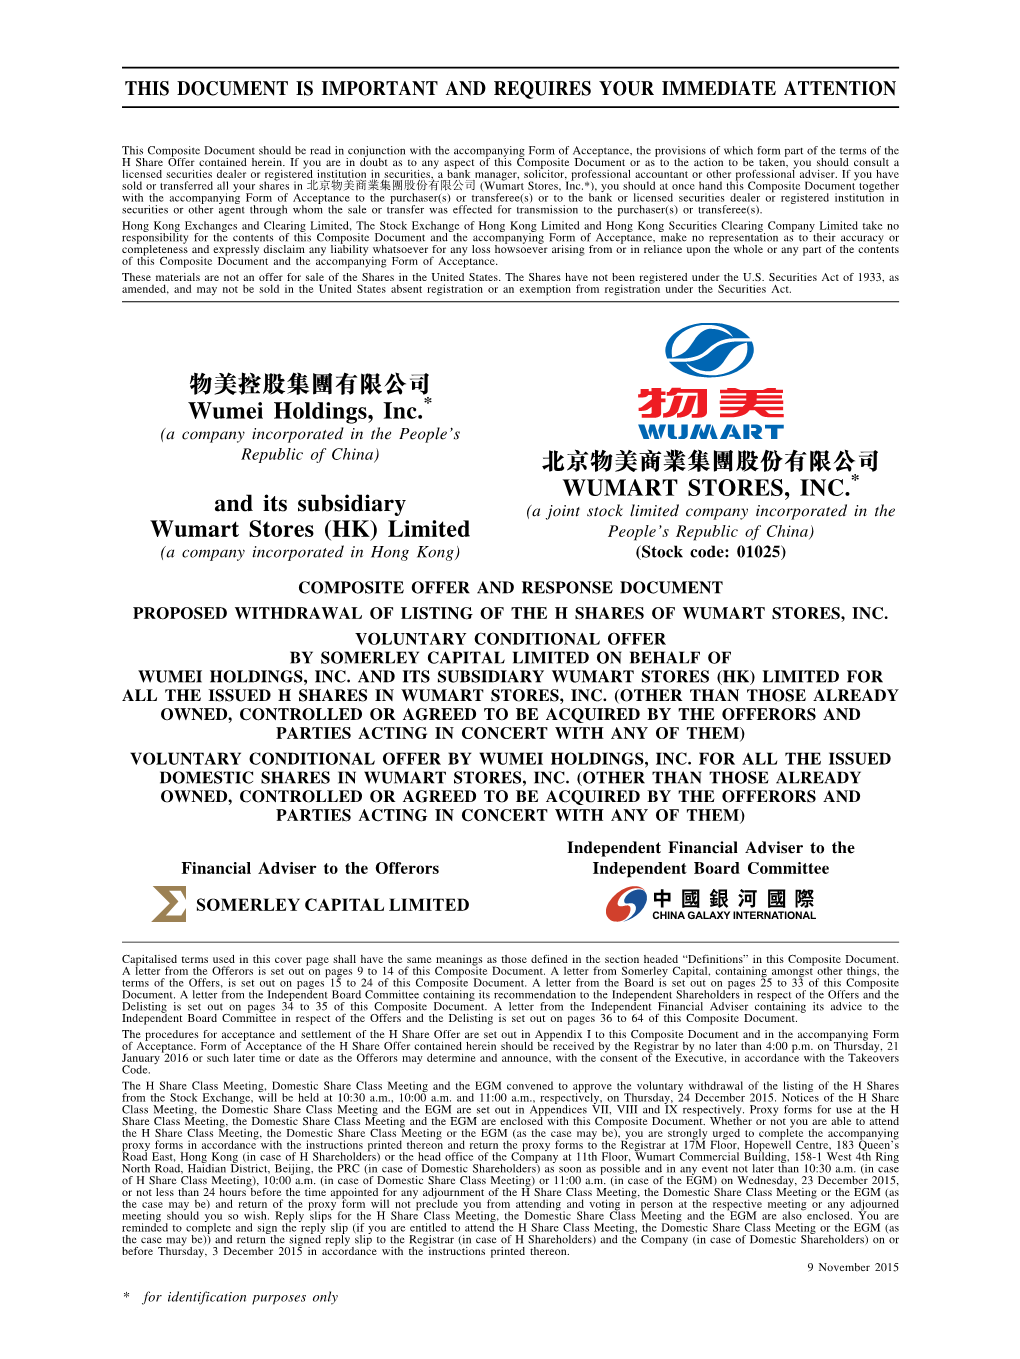 物美控股集團有限公司 Wumei Holdings, Inc. and Its Subsidiary